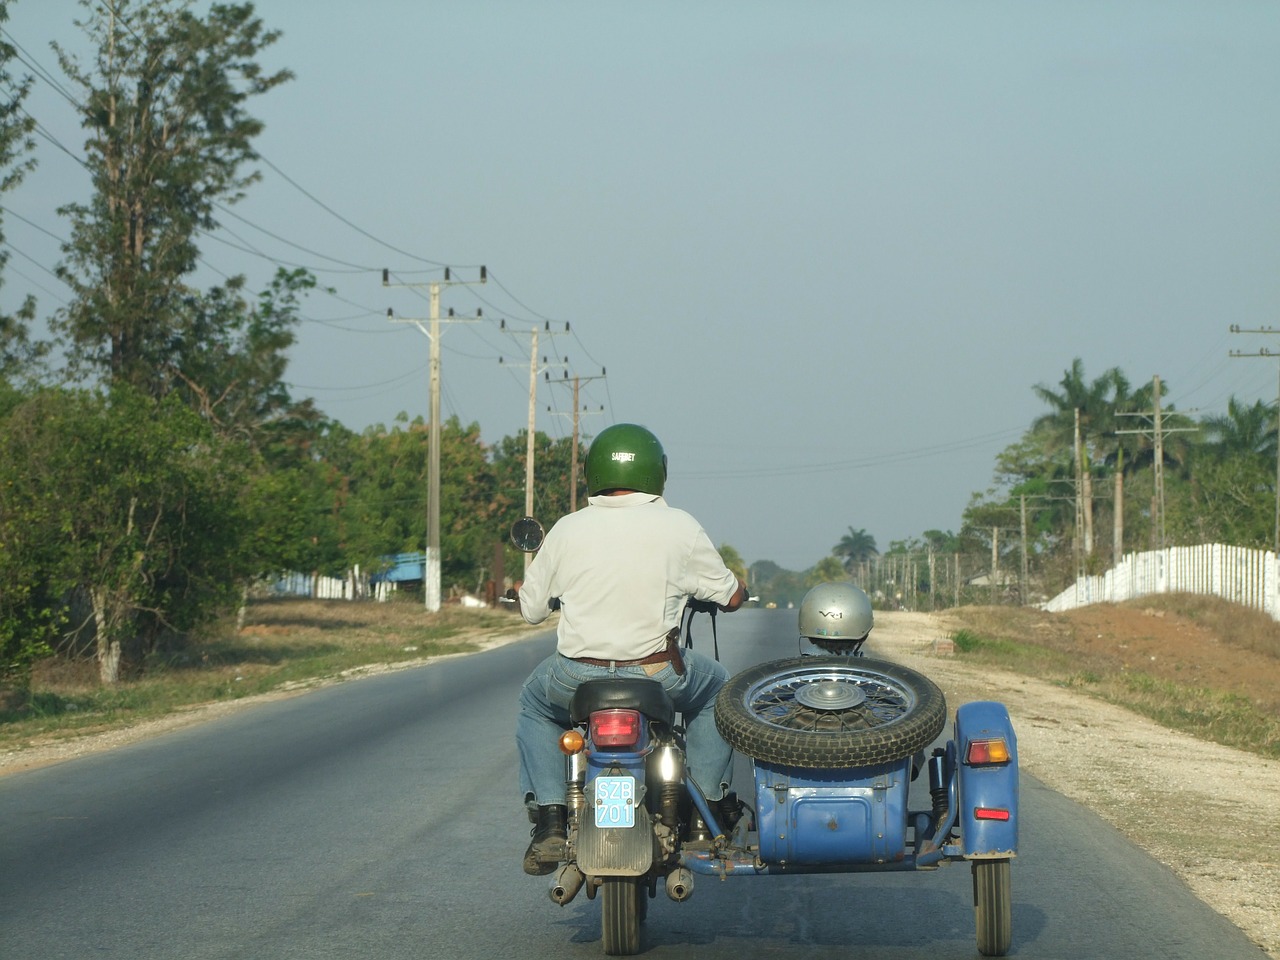 motorbike sidecar motor free photo